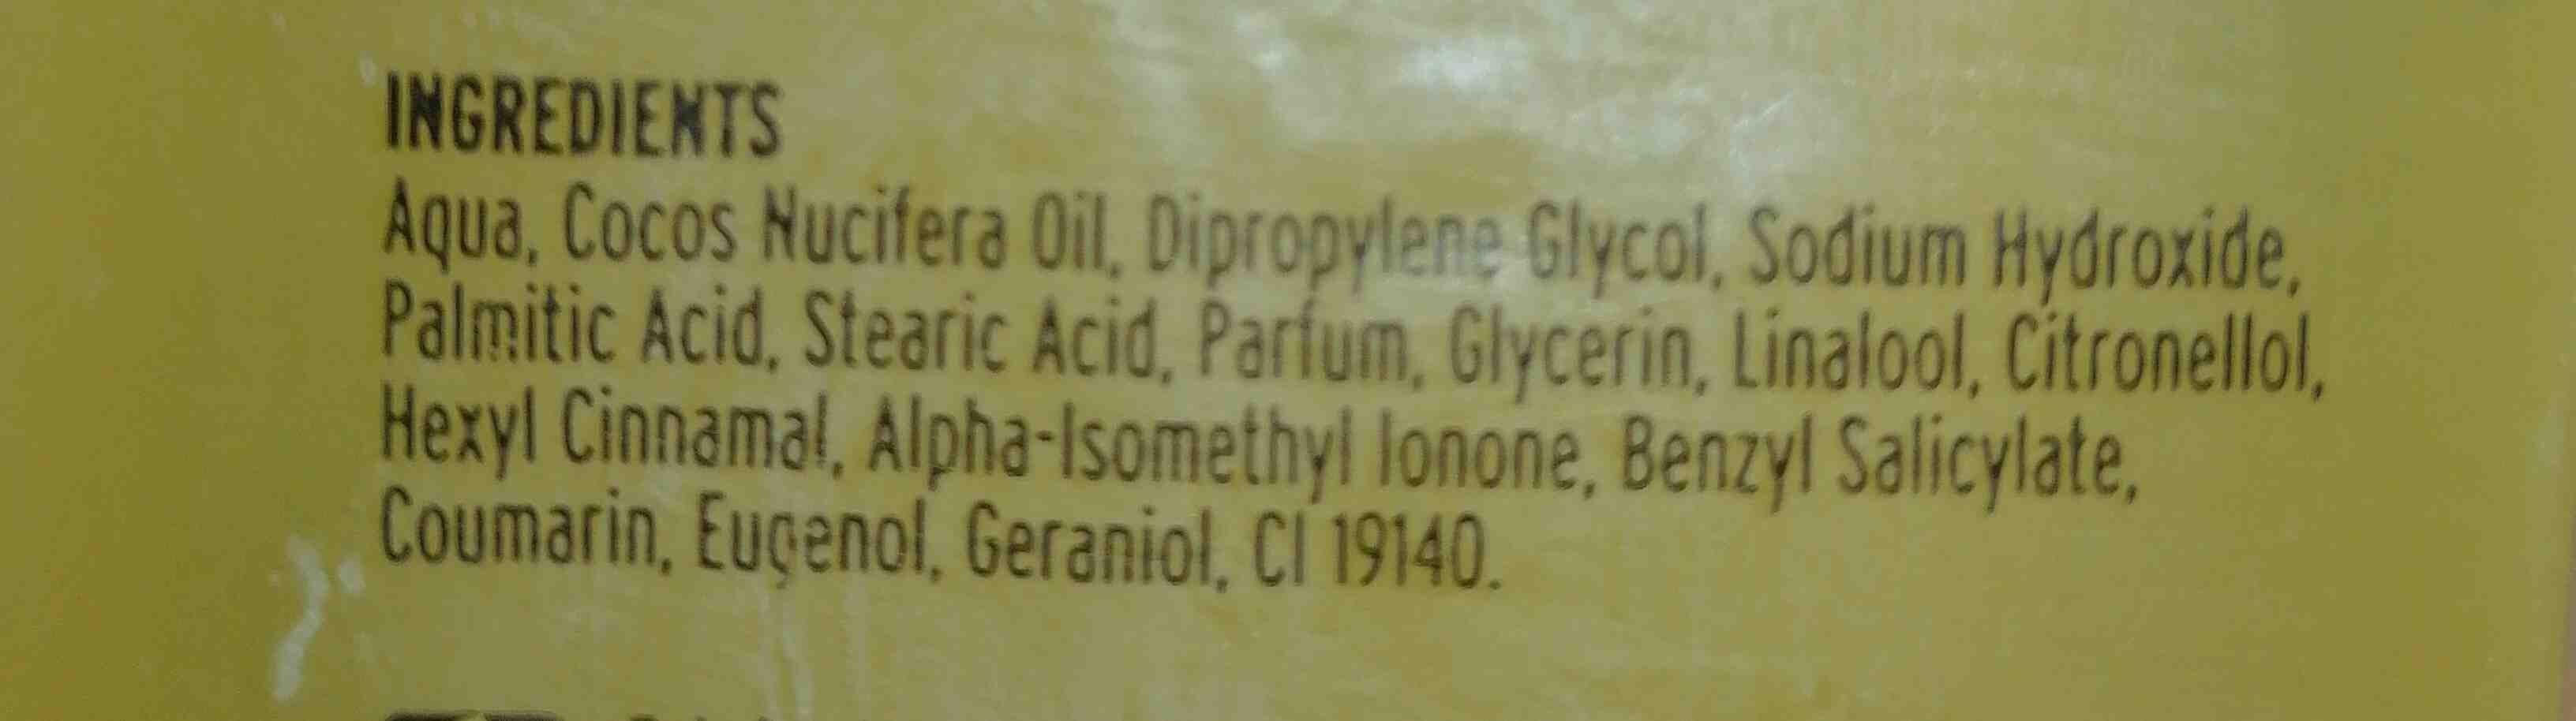 Belle glicerina jabon - Inhaltsstoffe - en